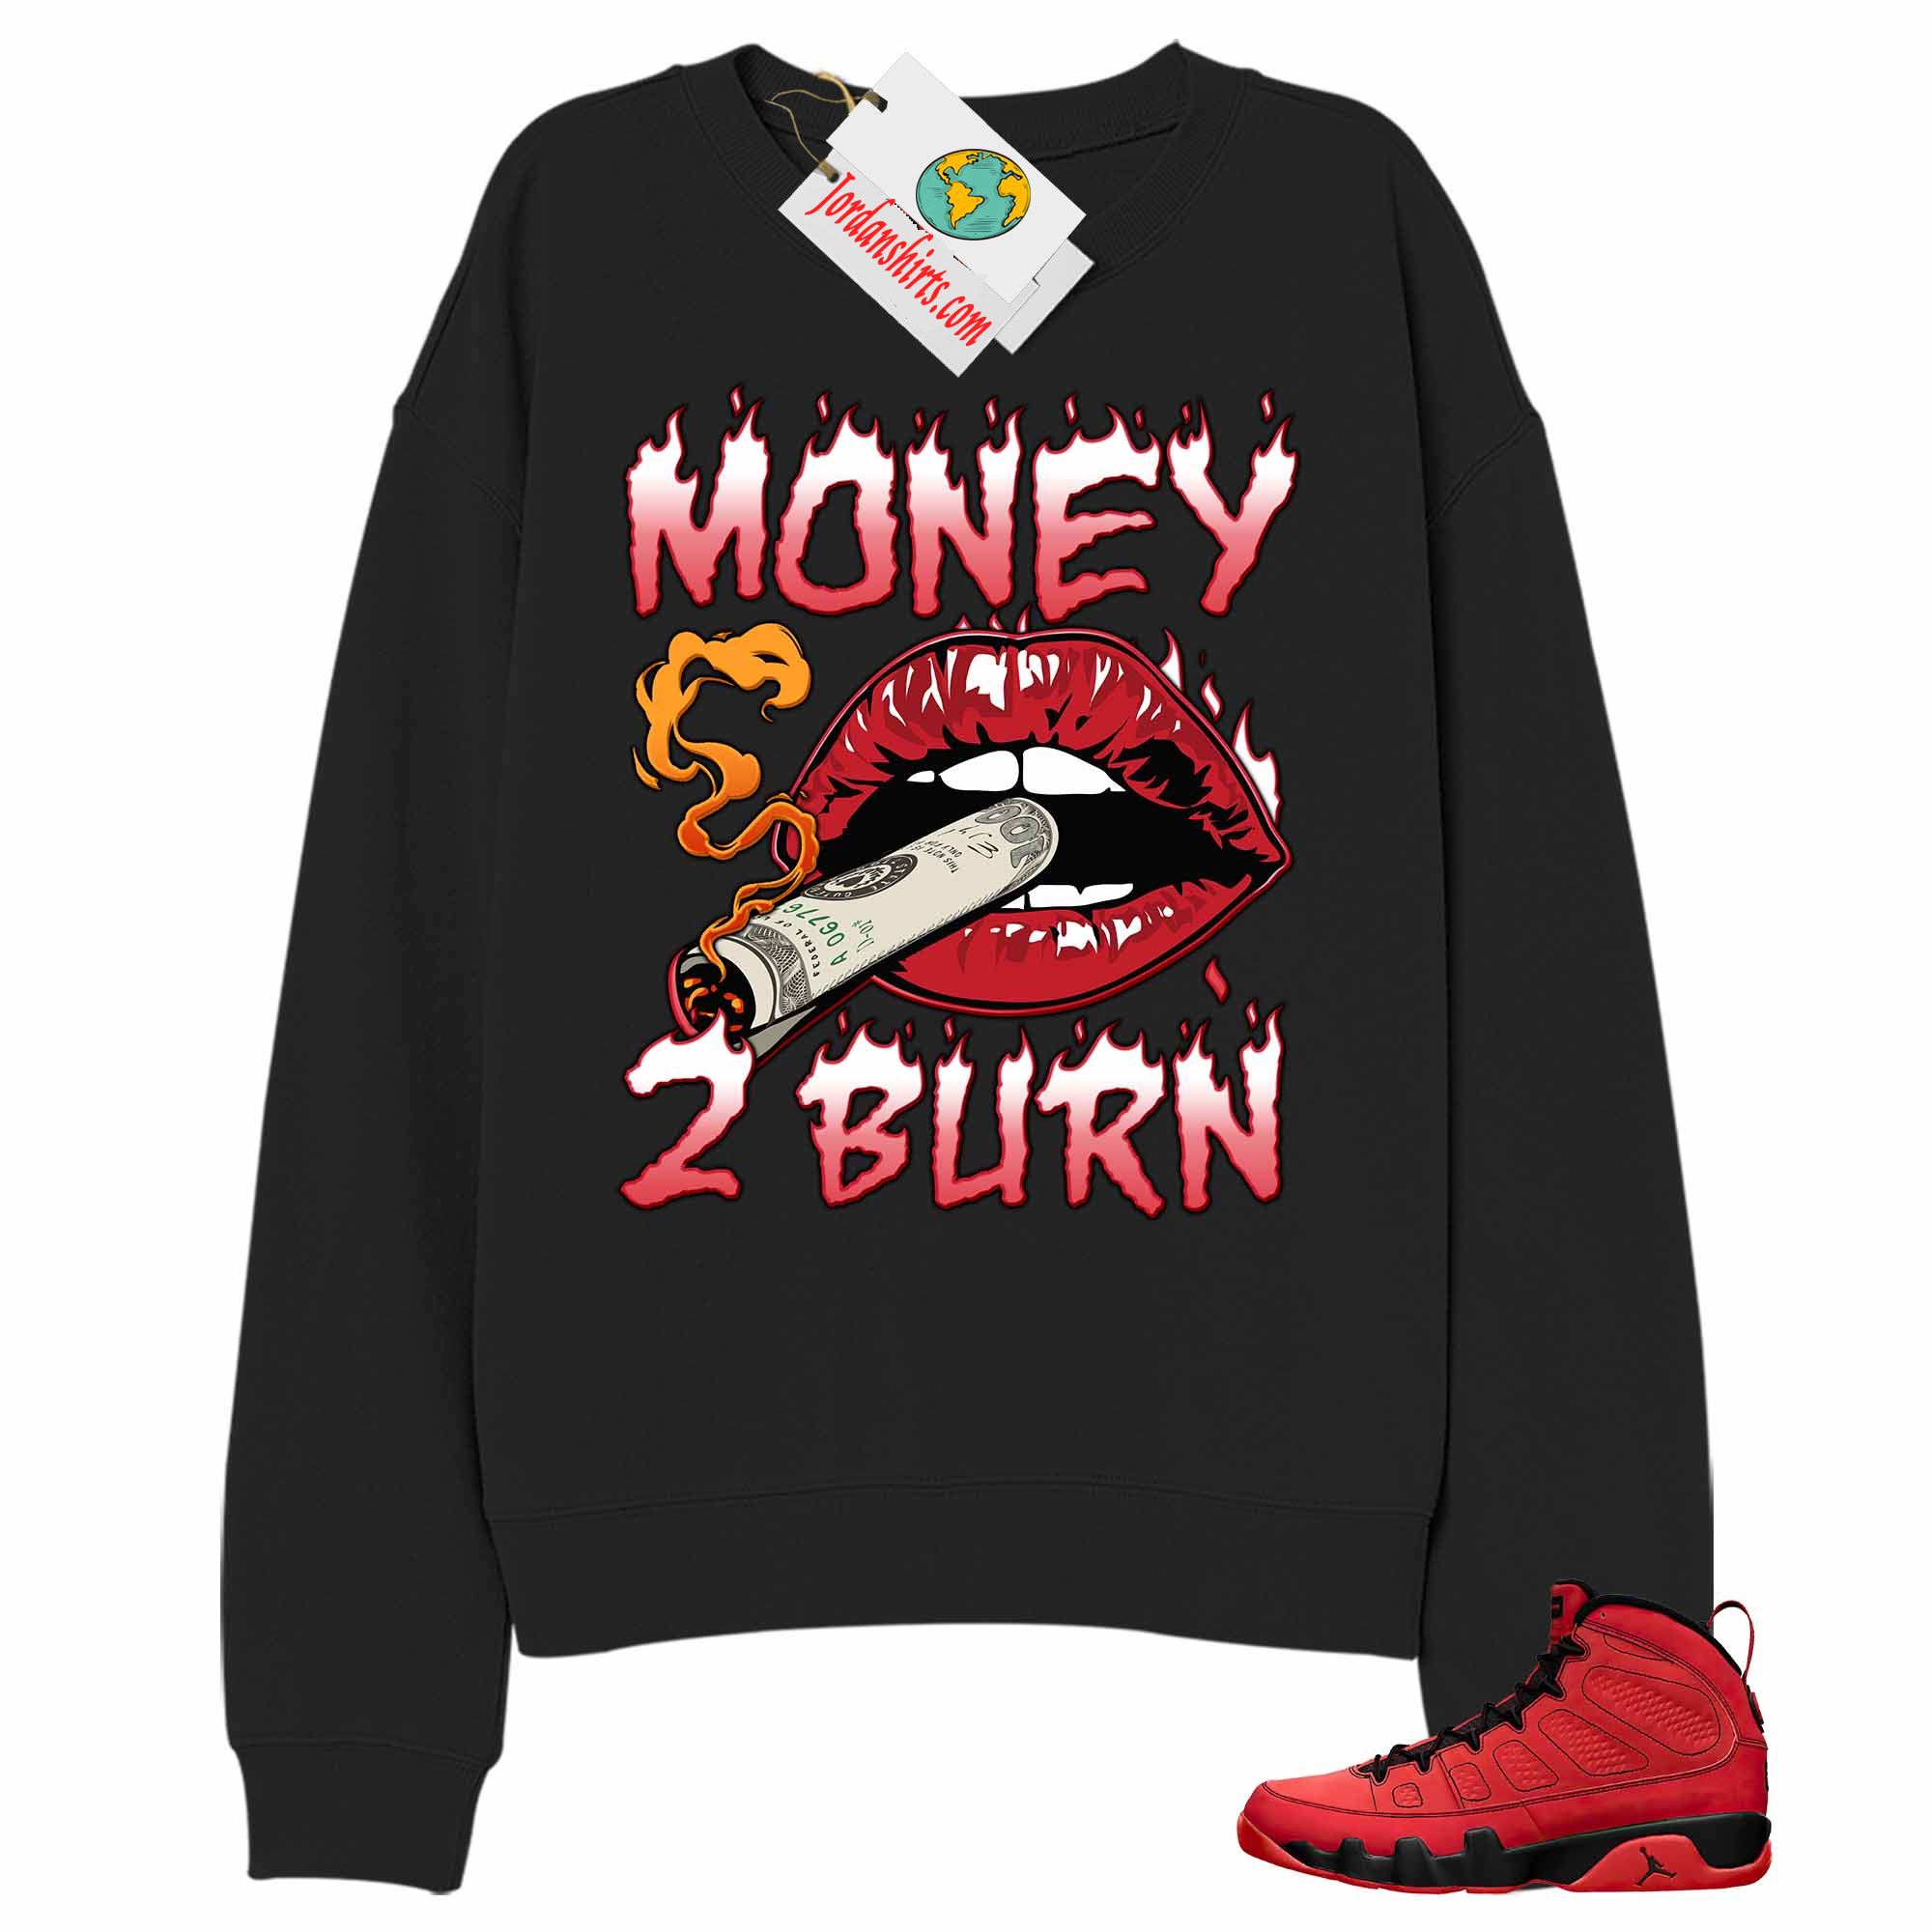 Jordan 9 Sweatshirt, Money To Burn Black Sweatshirt Air Jordan 9 Chile Red 9s Full Size Up To 5xl